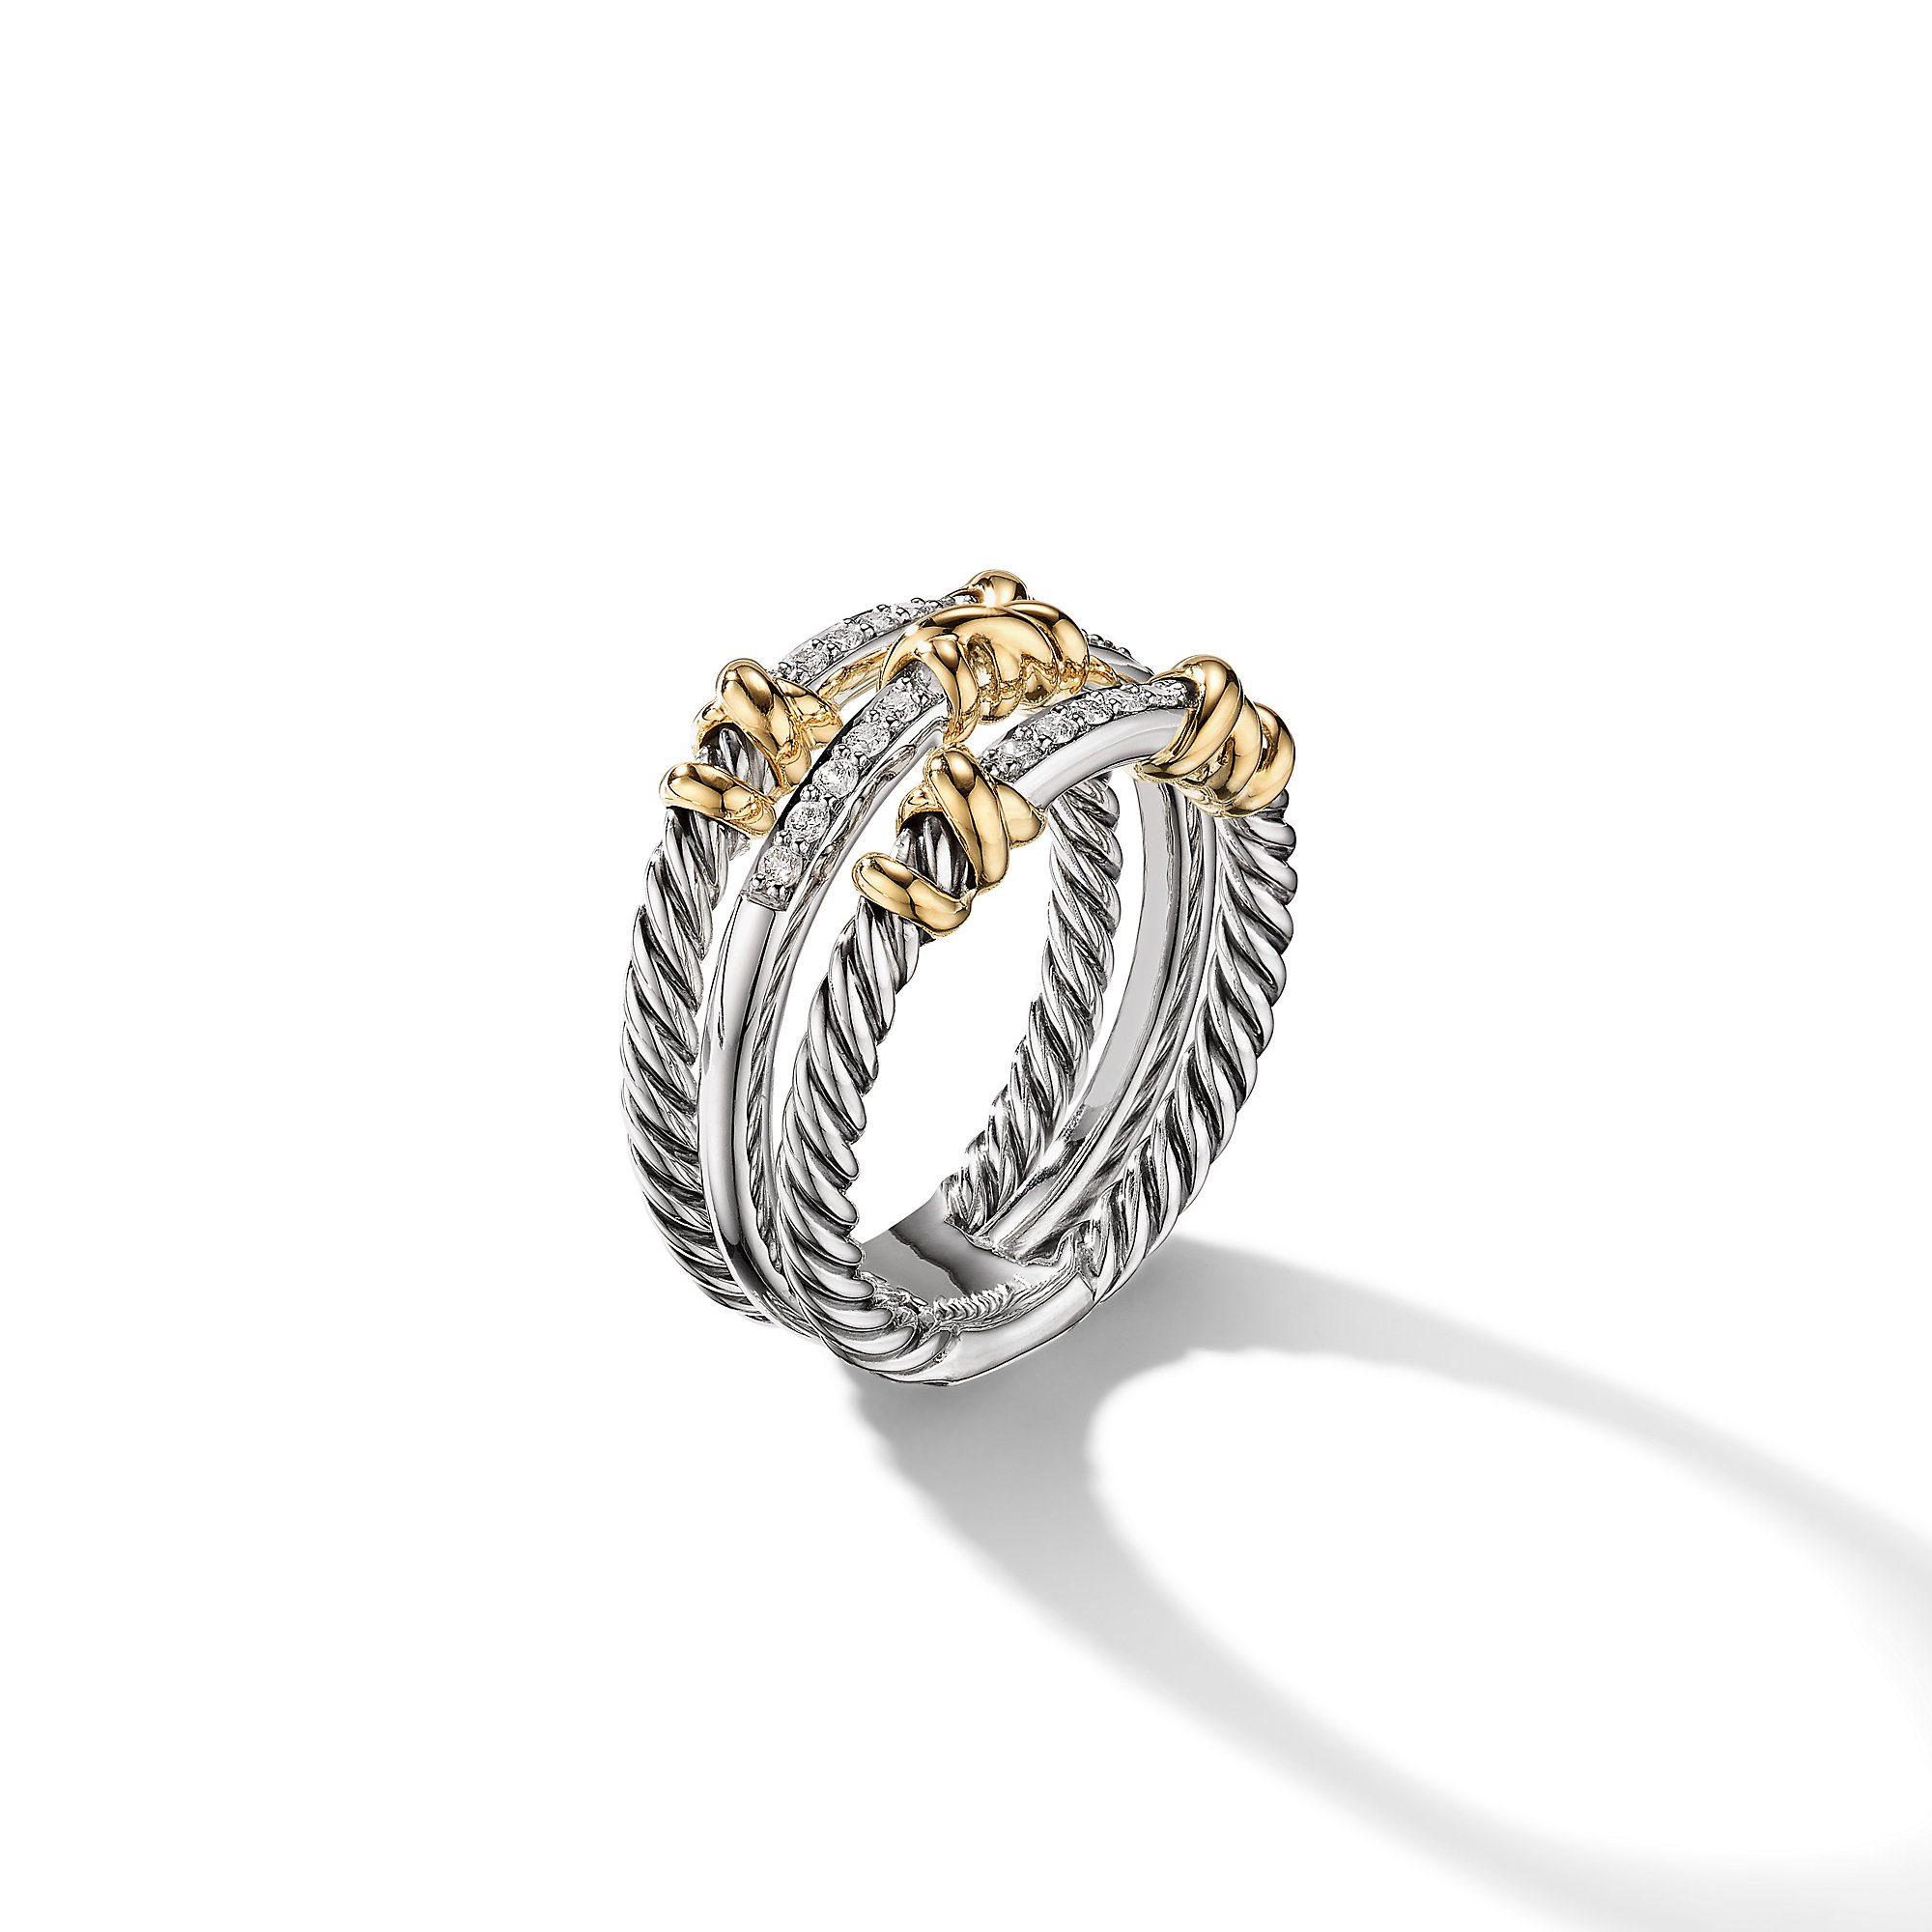 David Yurman Petite Helena Three Row Ring with 18K Yellow Gold and Diamonds | Top View